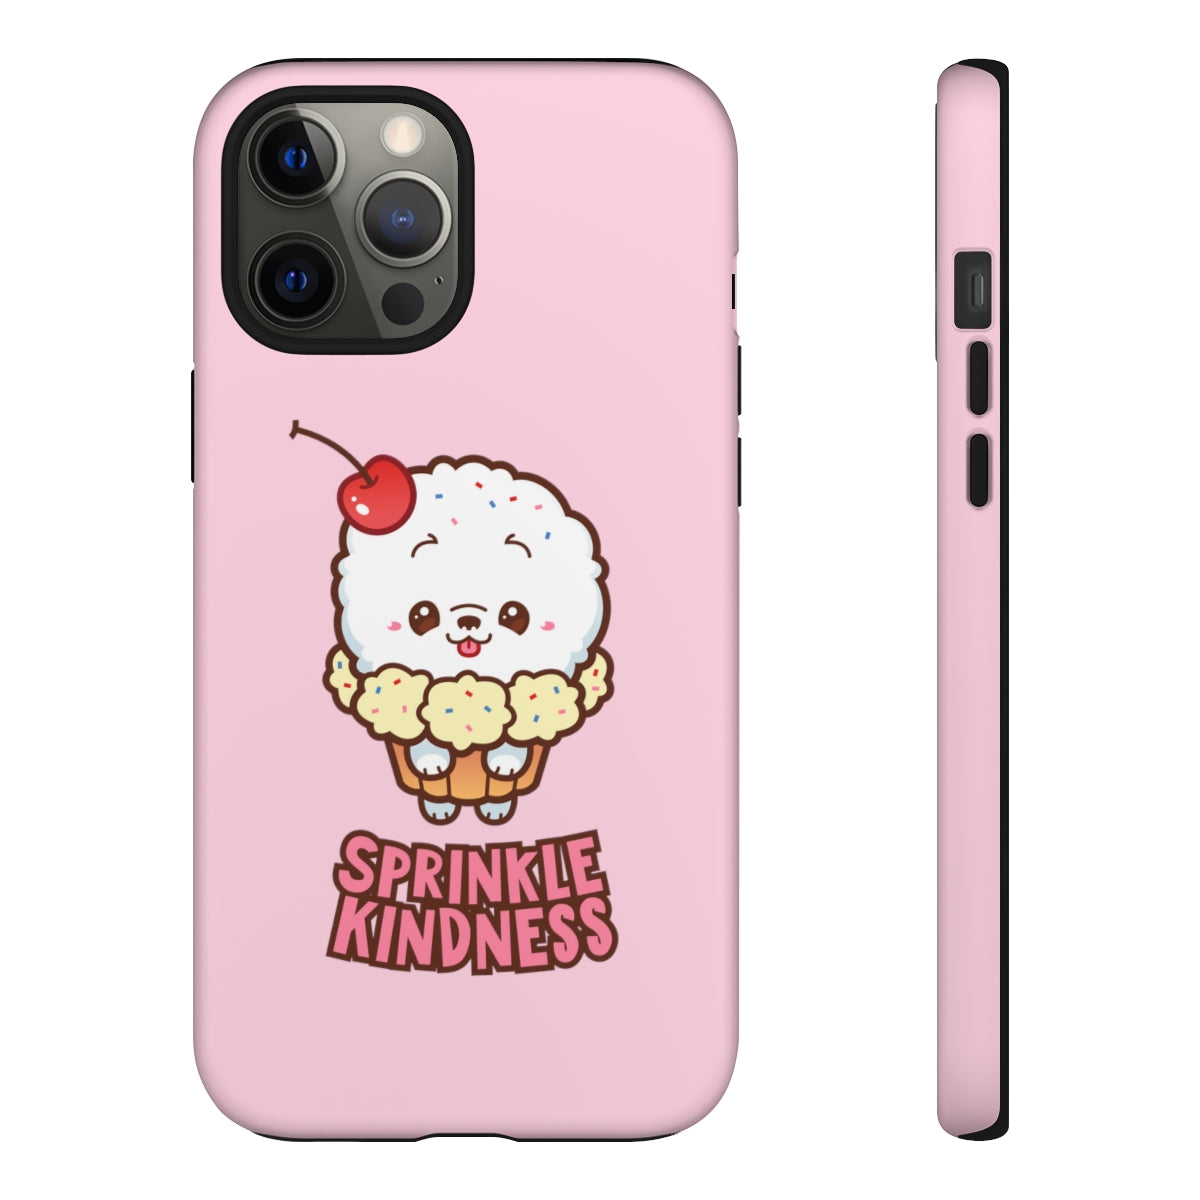 Cute Kawaii Phone Case, Puppy iPhone Case, Bichon iPhone Case, Chibi iPhone Case, Pastel Pink Phone Case, Aesthetic Phone Case